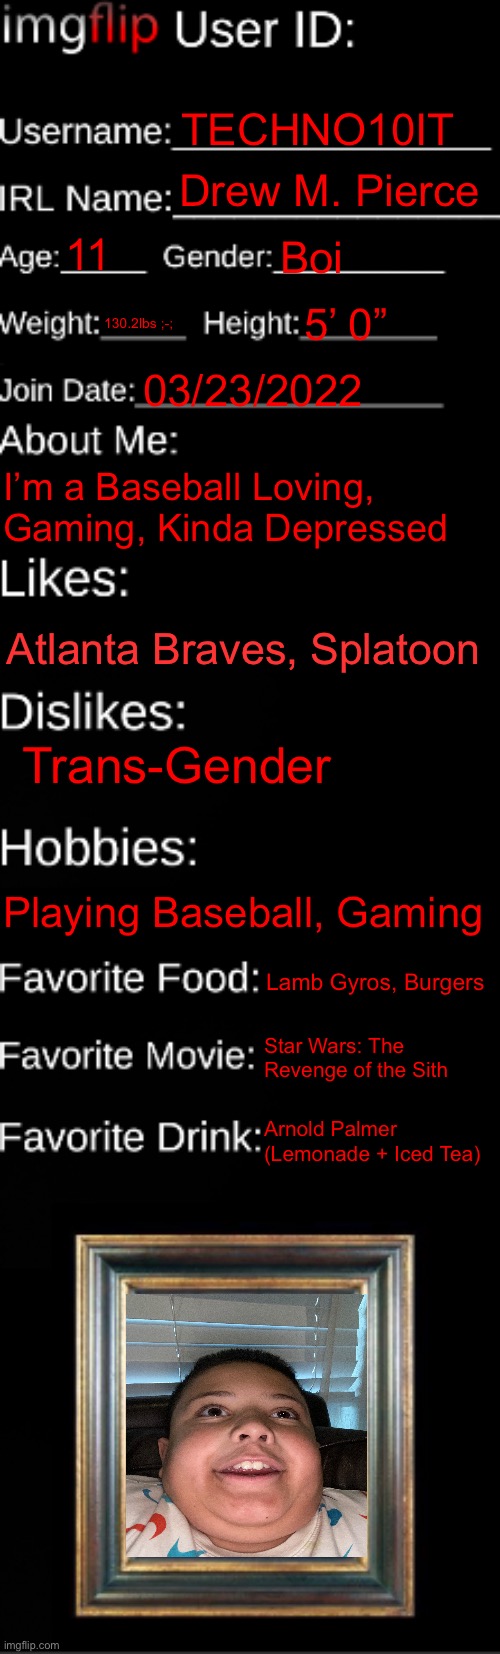 I know, I’m hot ;) | TECHNO10IT; Drew M. Pierce; 11; Boi; 130.2lbs ;-;; 5’ 0”; 03/23/2022; I’m a Baseball Loving, Gaming, Kinda Depressed; Atlanta Braves, Splatoon; Trans-Gender; Playing Baseball, Gaming; Lamb Gyros, Burgers; Star Wars: The Revenge of the Sith; Arnold Palmer (Lemonade + Iced Tea) | image tagged in imgflip id card | made w/ Imgflip meme maker